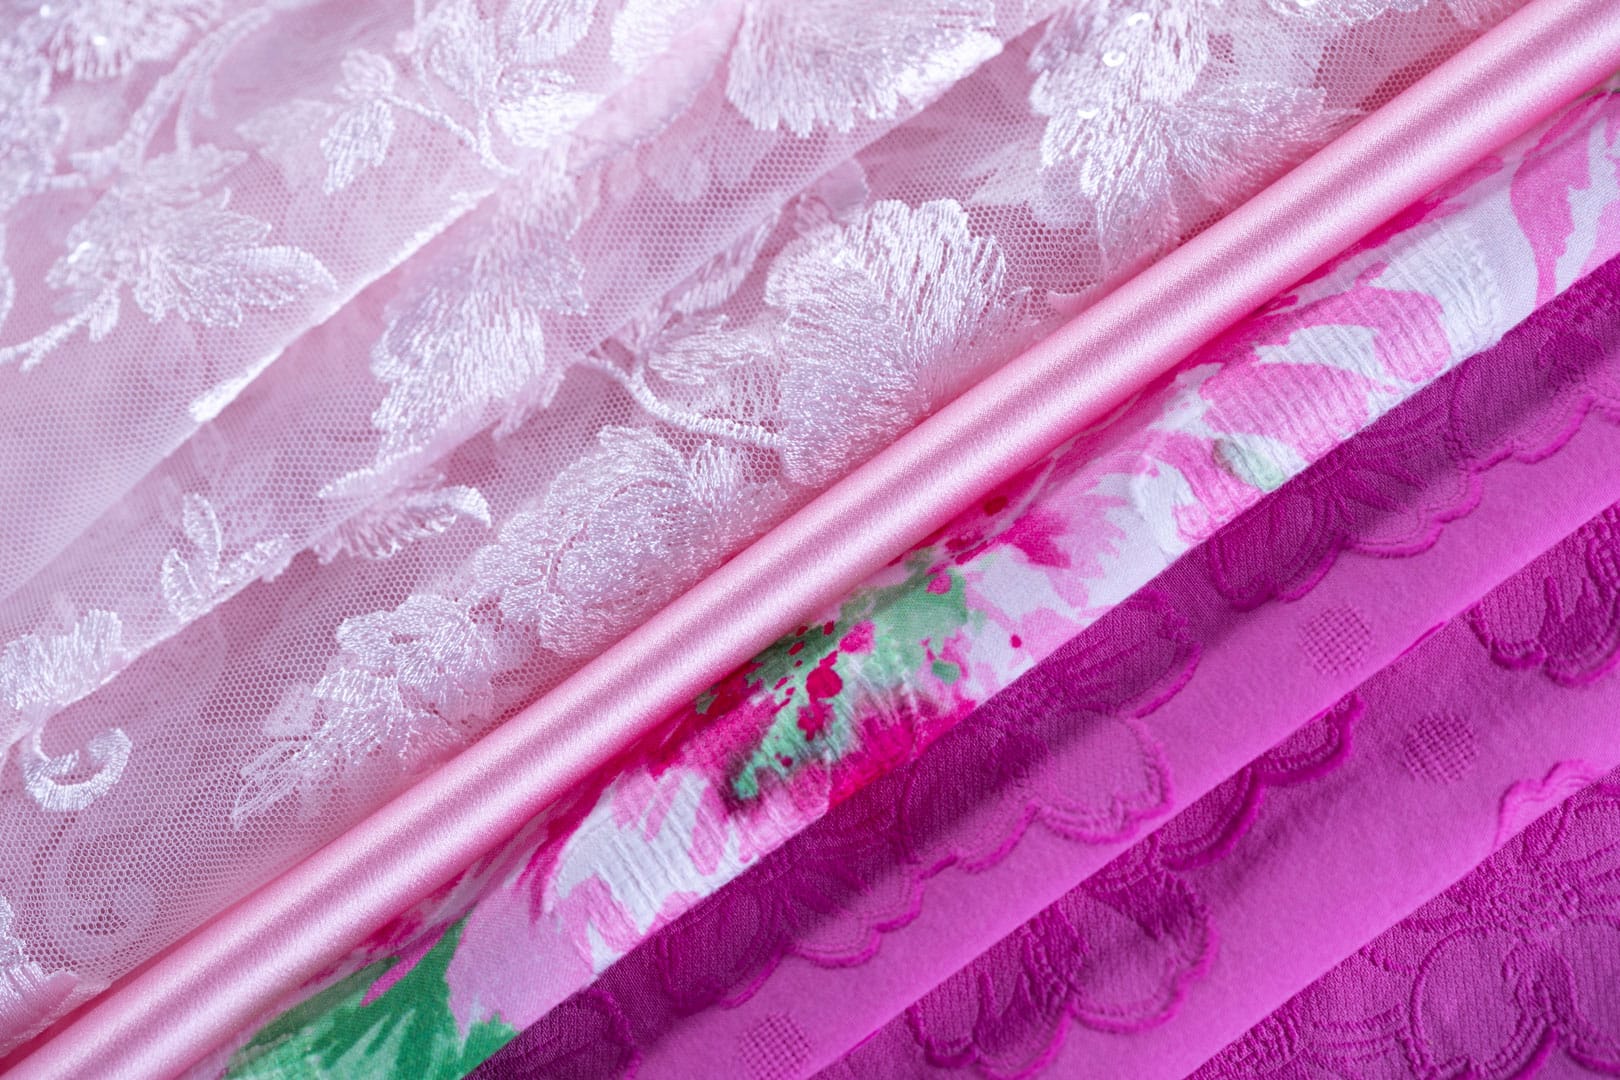 Fall 2022 colour trends - pink and fuchsia | new tess fabrics